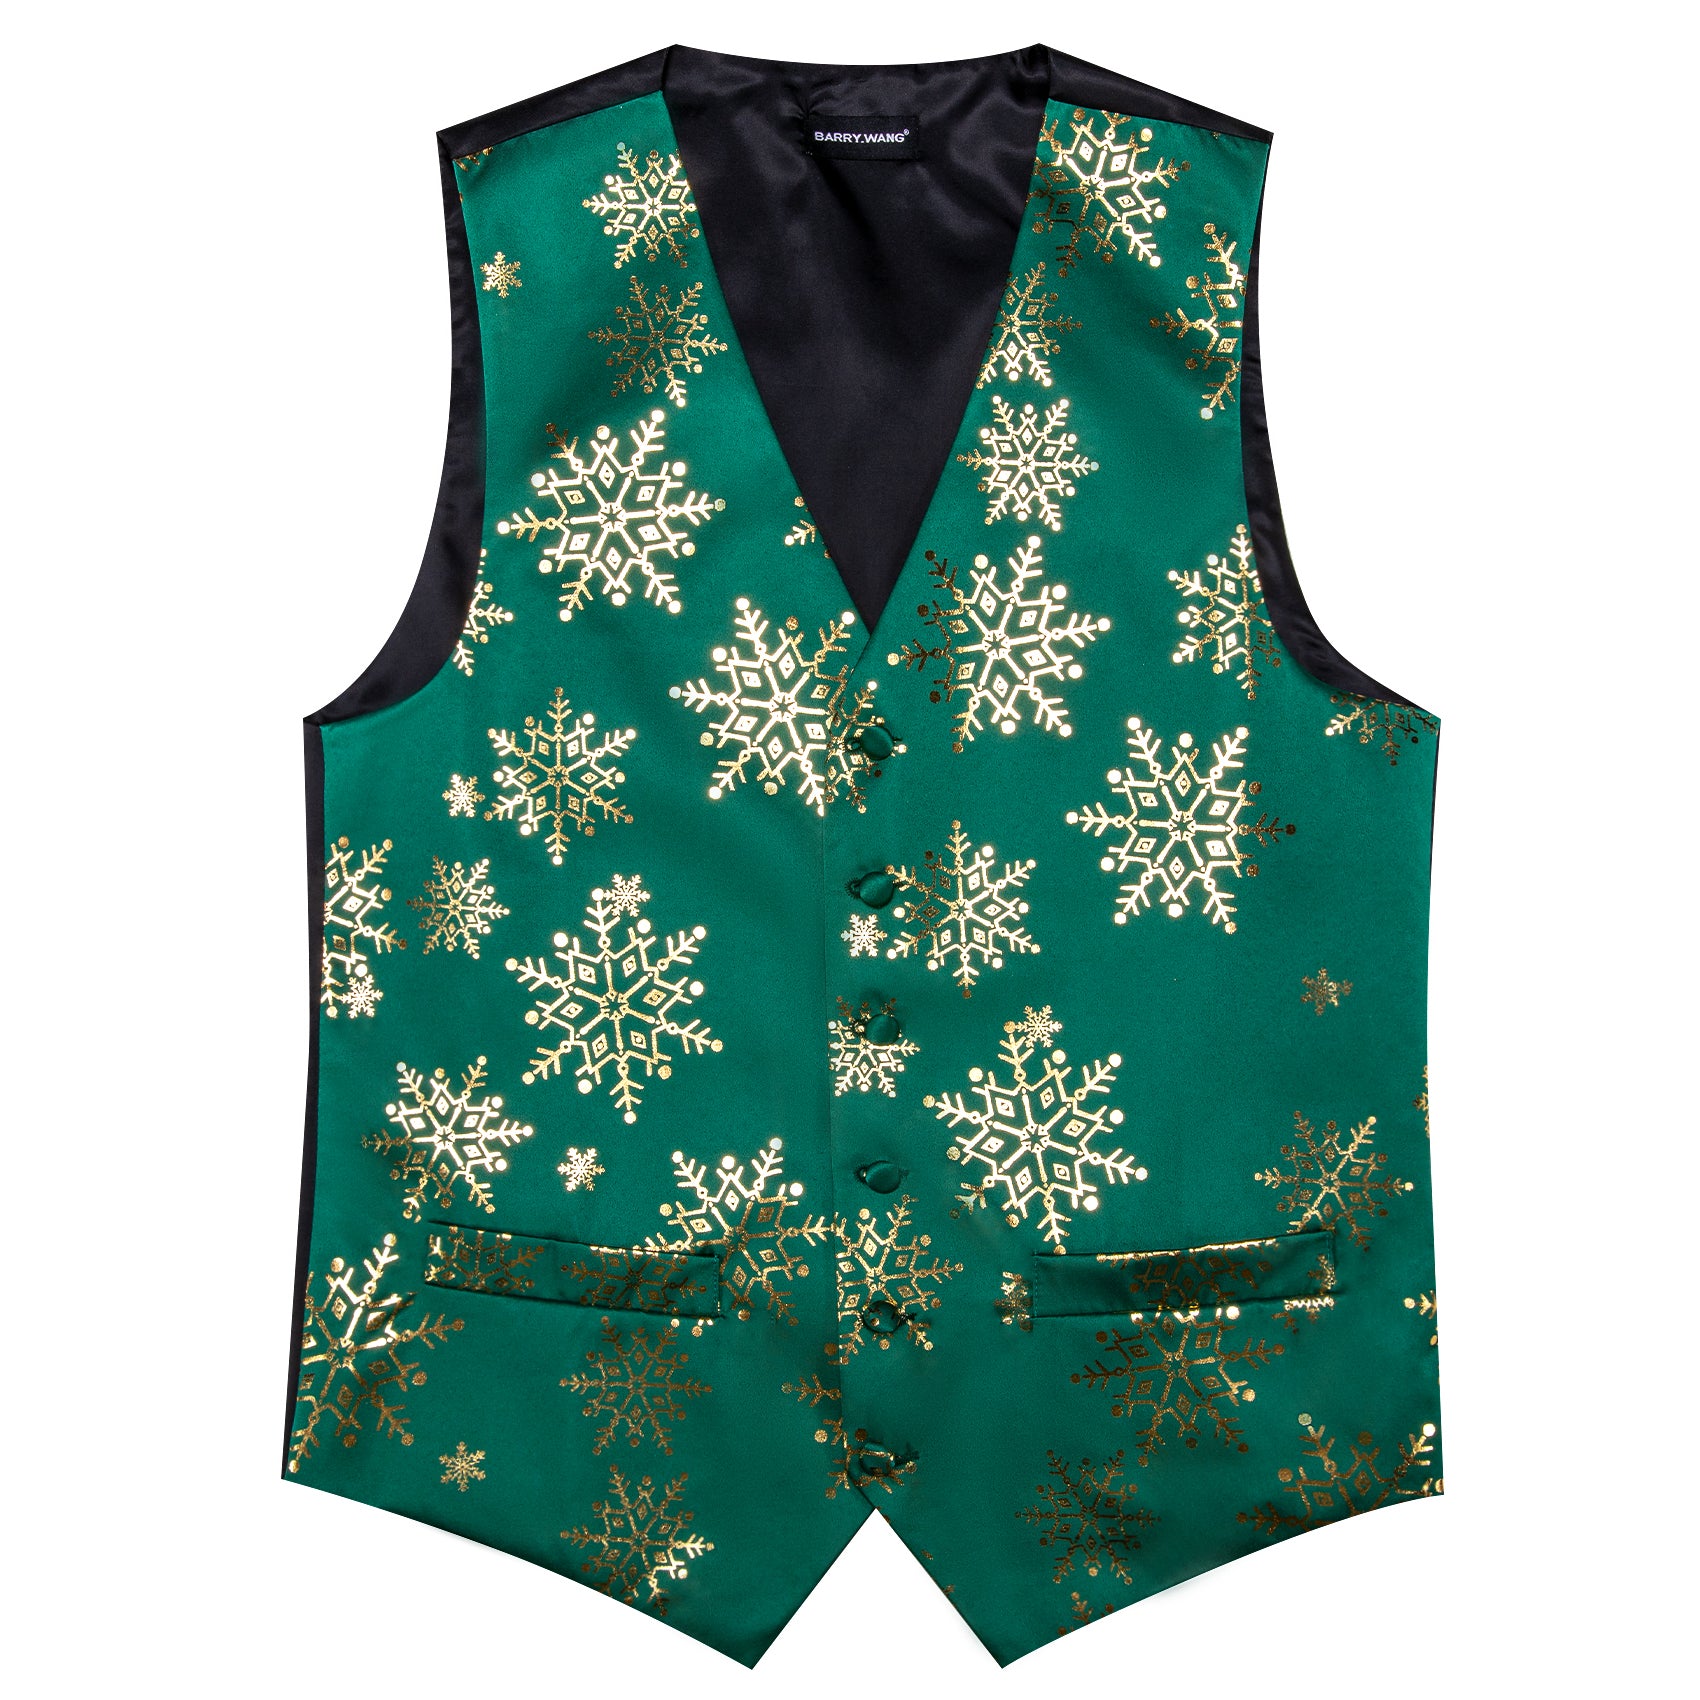 Christmas Green Gold Snowflake Silk Vest Necktie Pocket Square Cufflinks Set